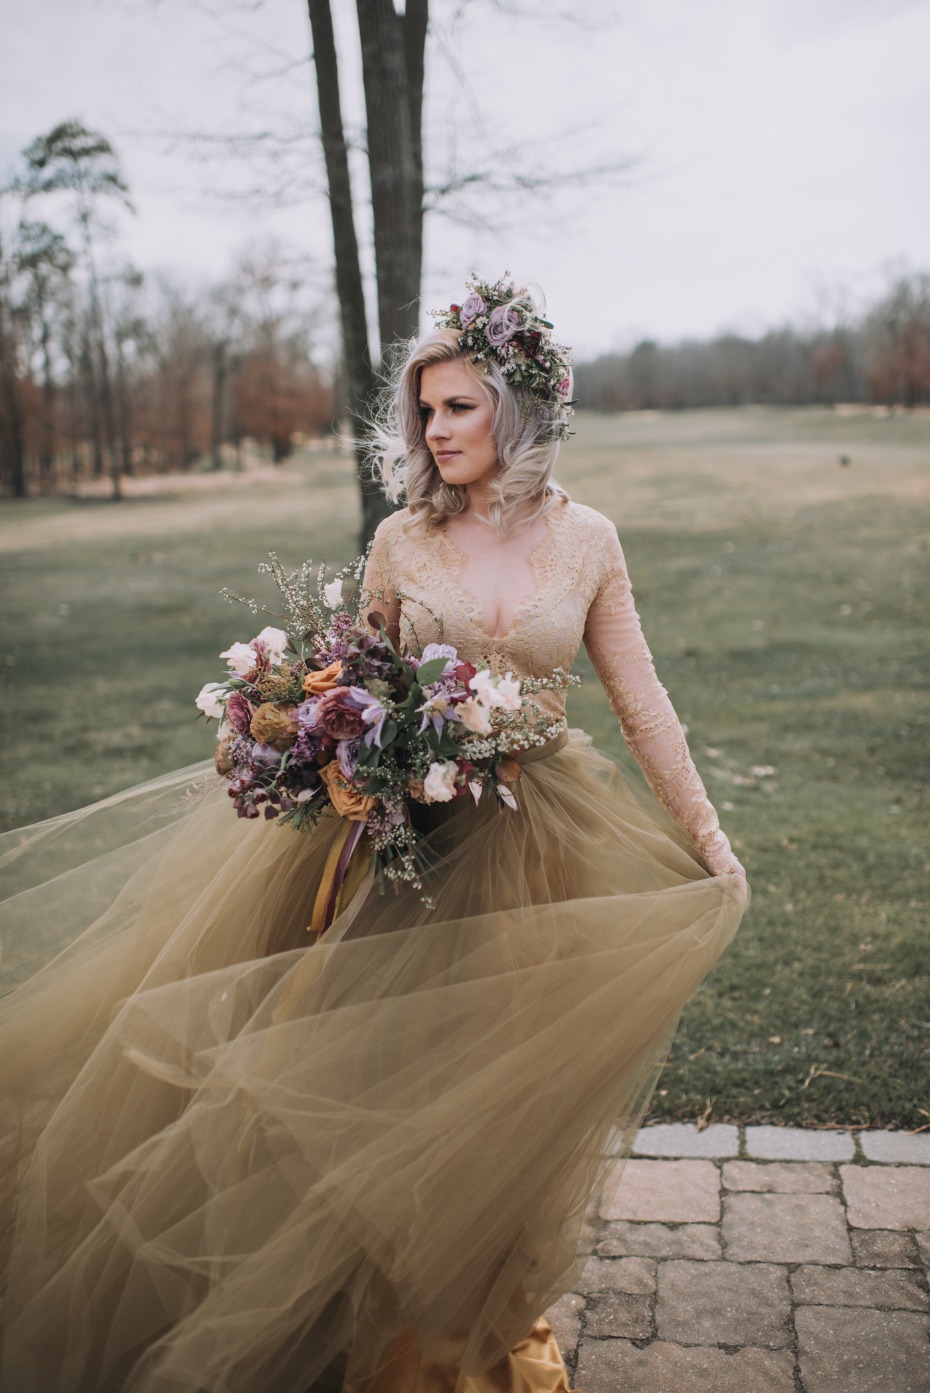 Spring rose gold wedding dress with lavender